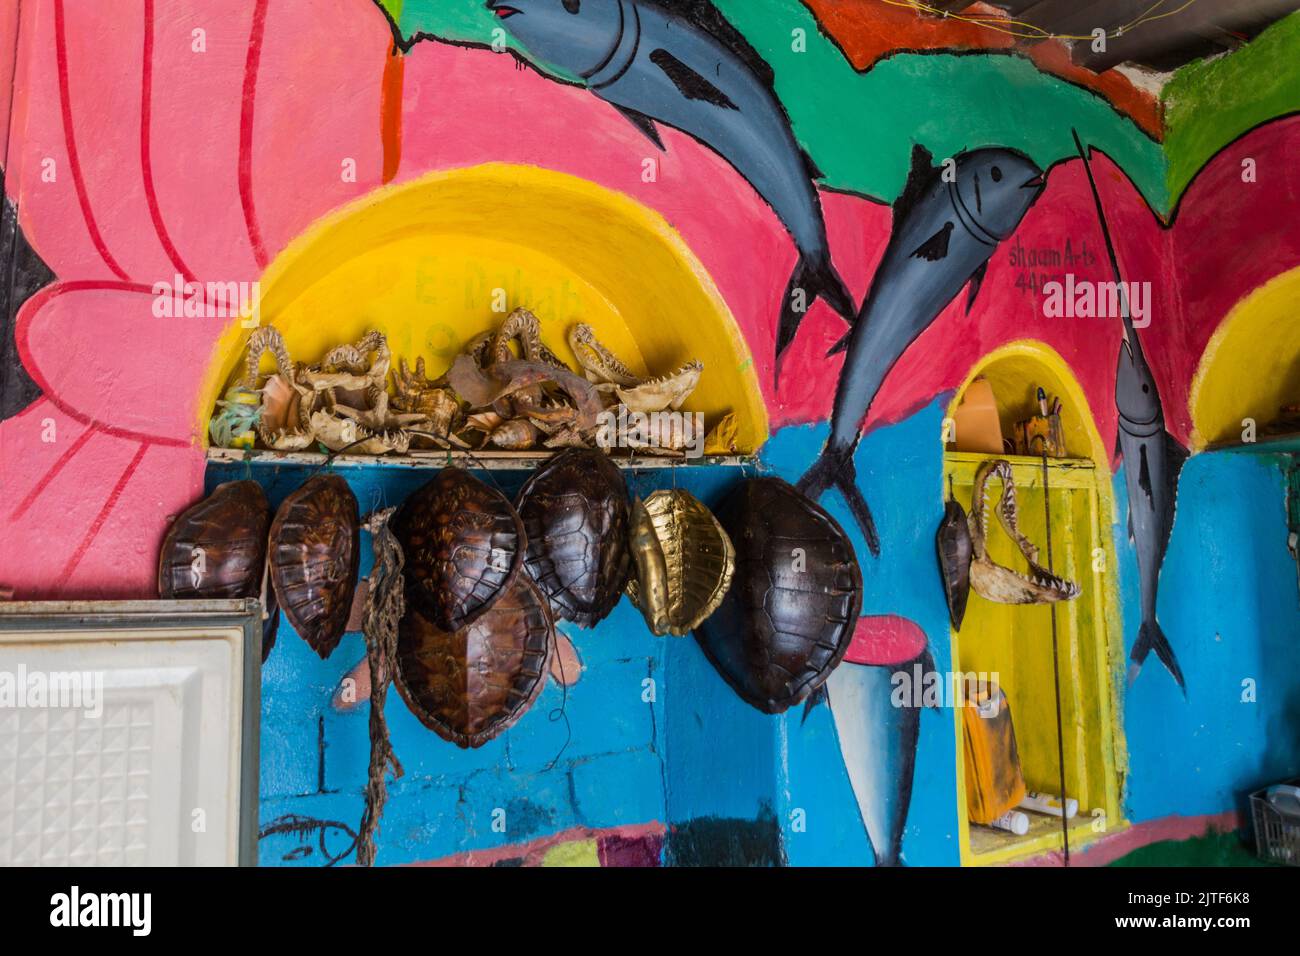 BERBERA, SOMALILAND - 13. APRIL 2019: Innenansicht eines Fischladens in Berbera, Somaliland Stockfoto